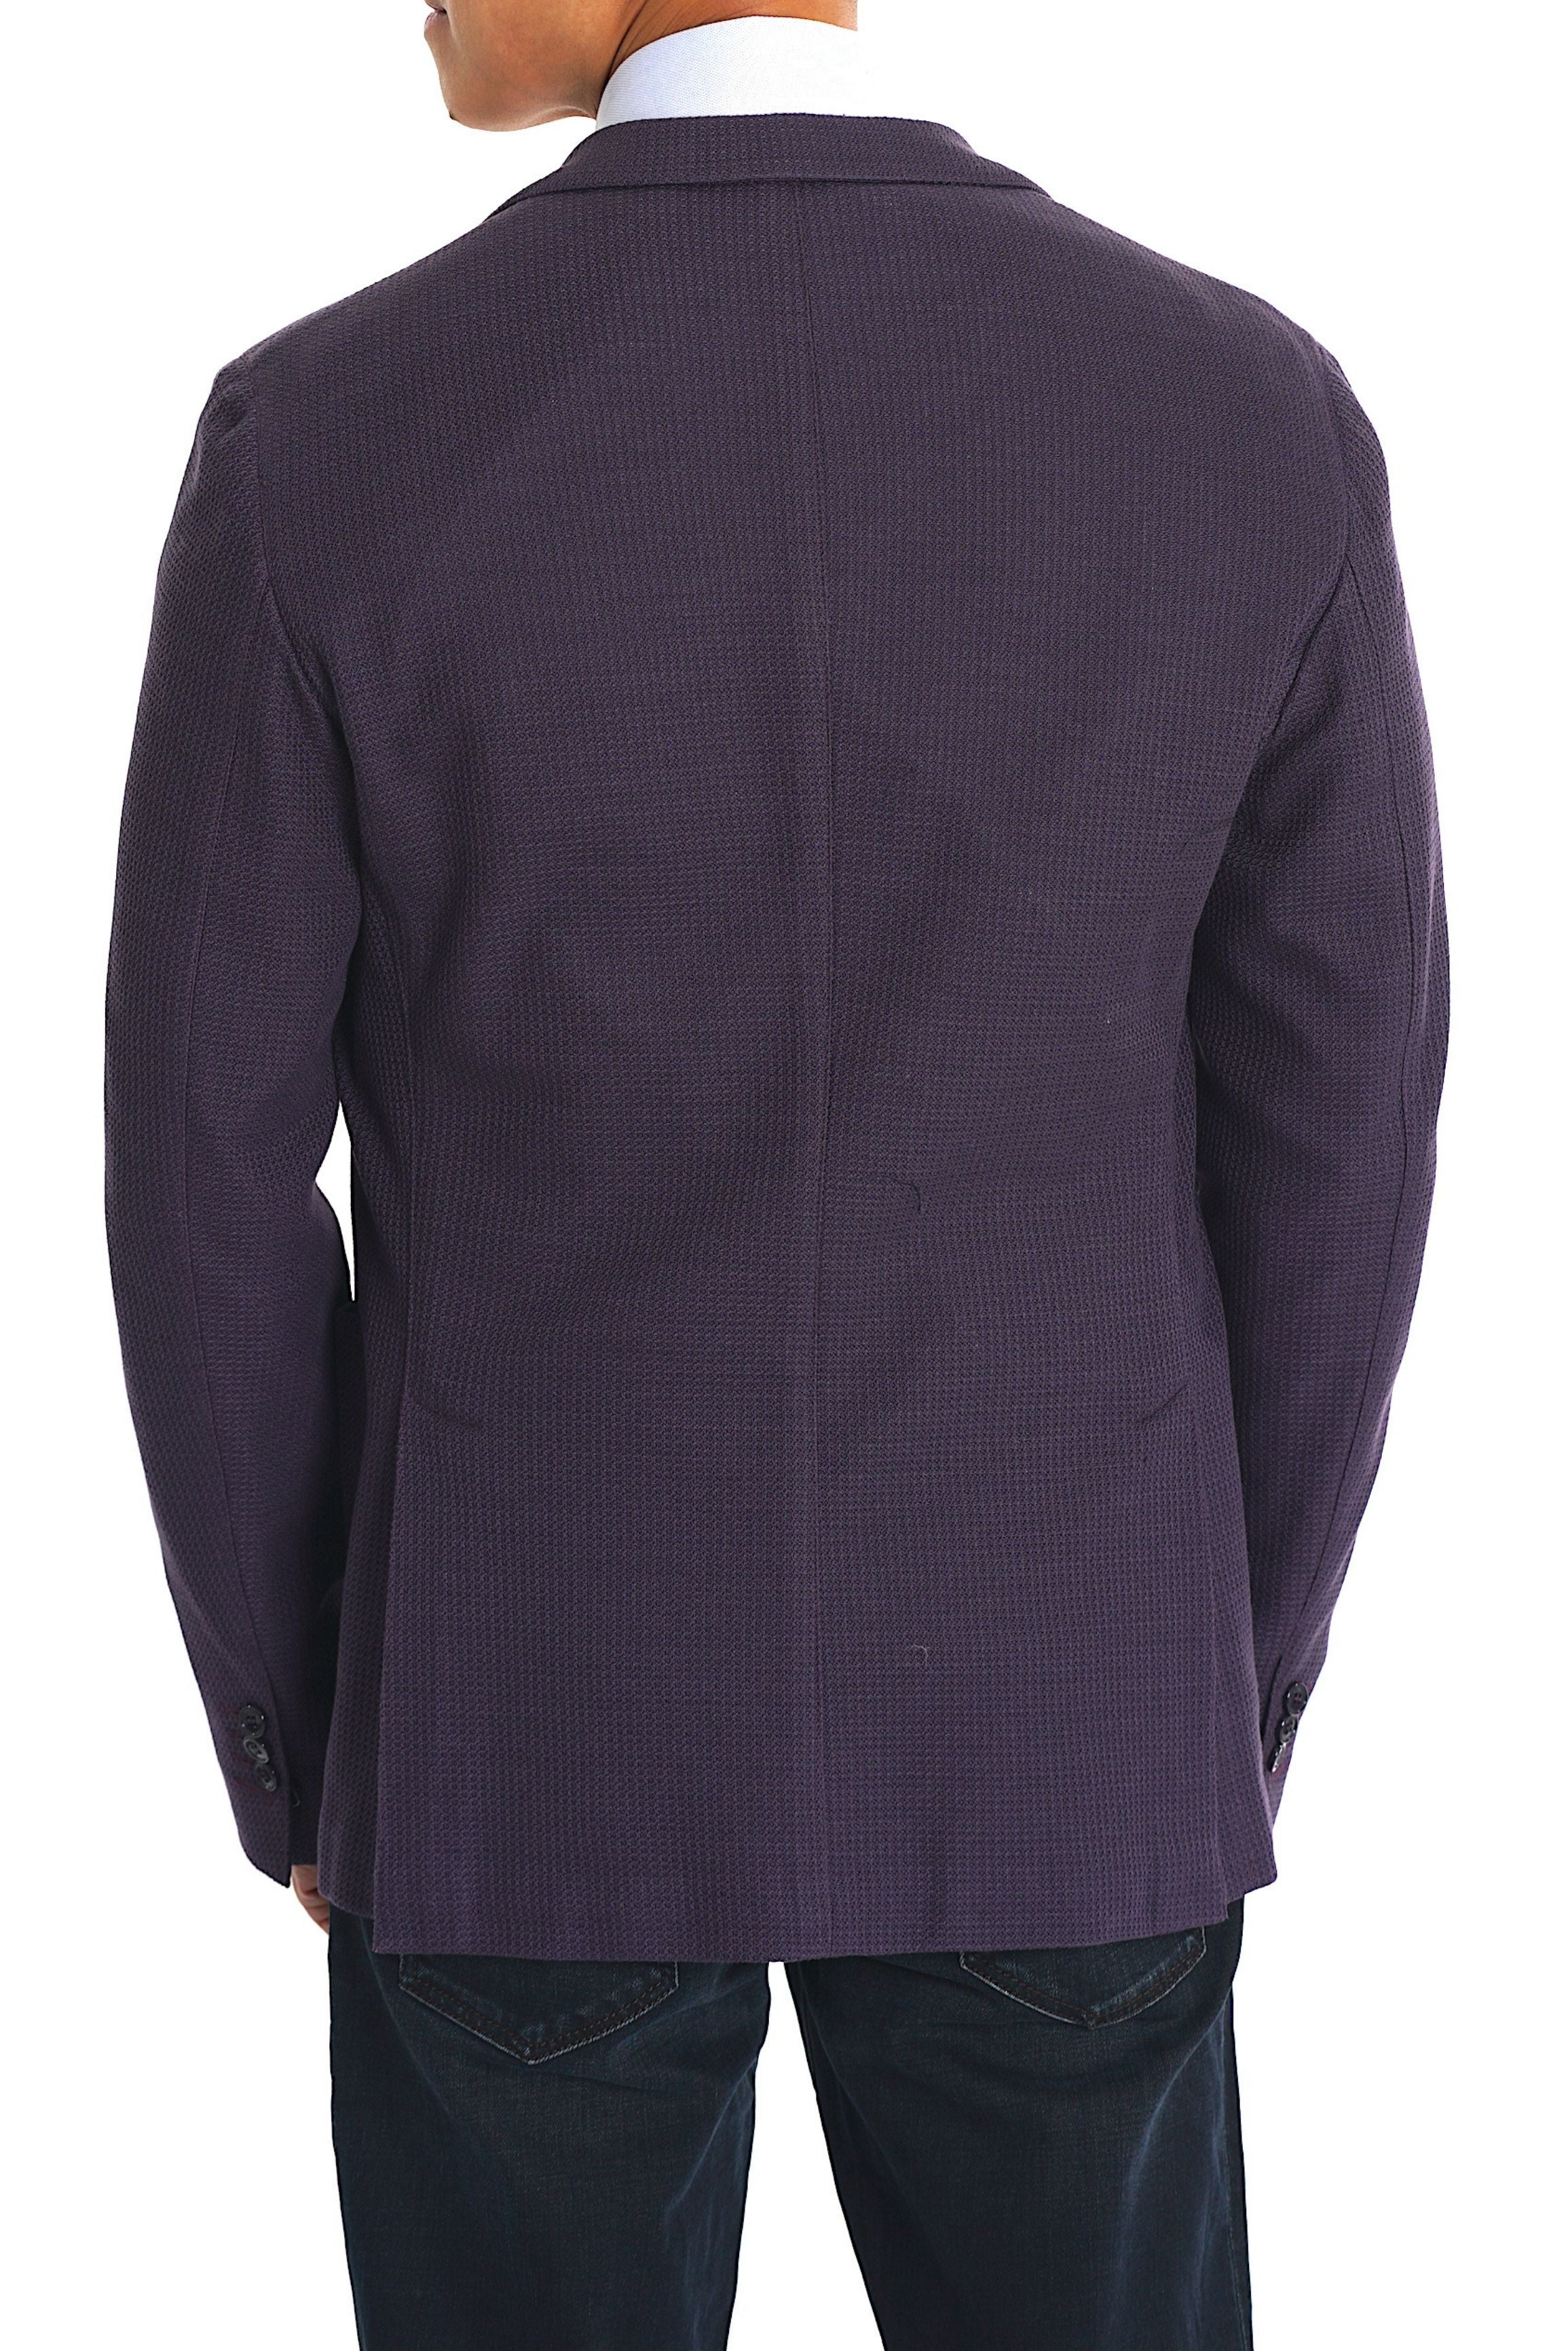 Pal Zileri Burt Purple Sport Coat - Mastroianni Fashions